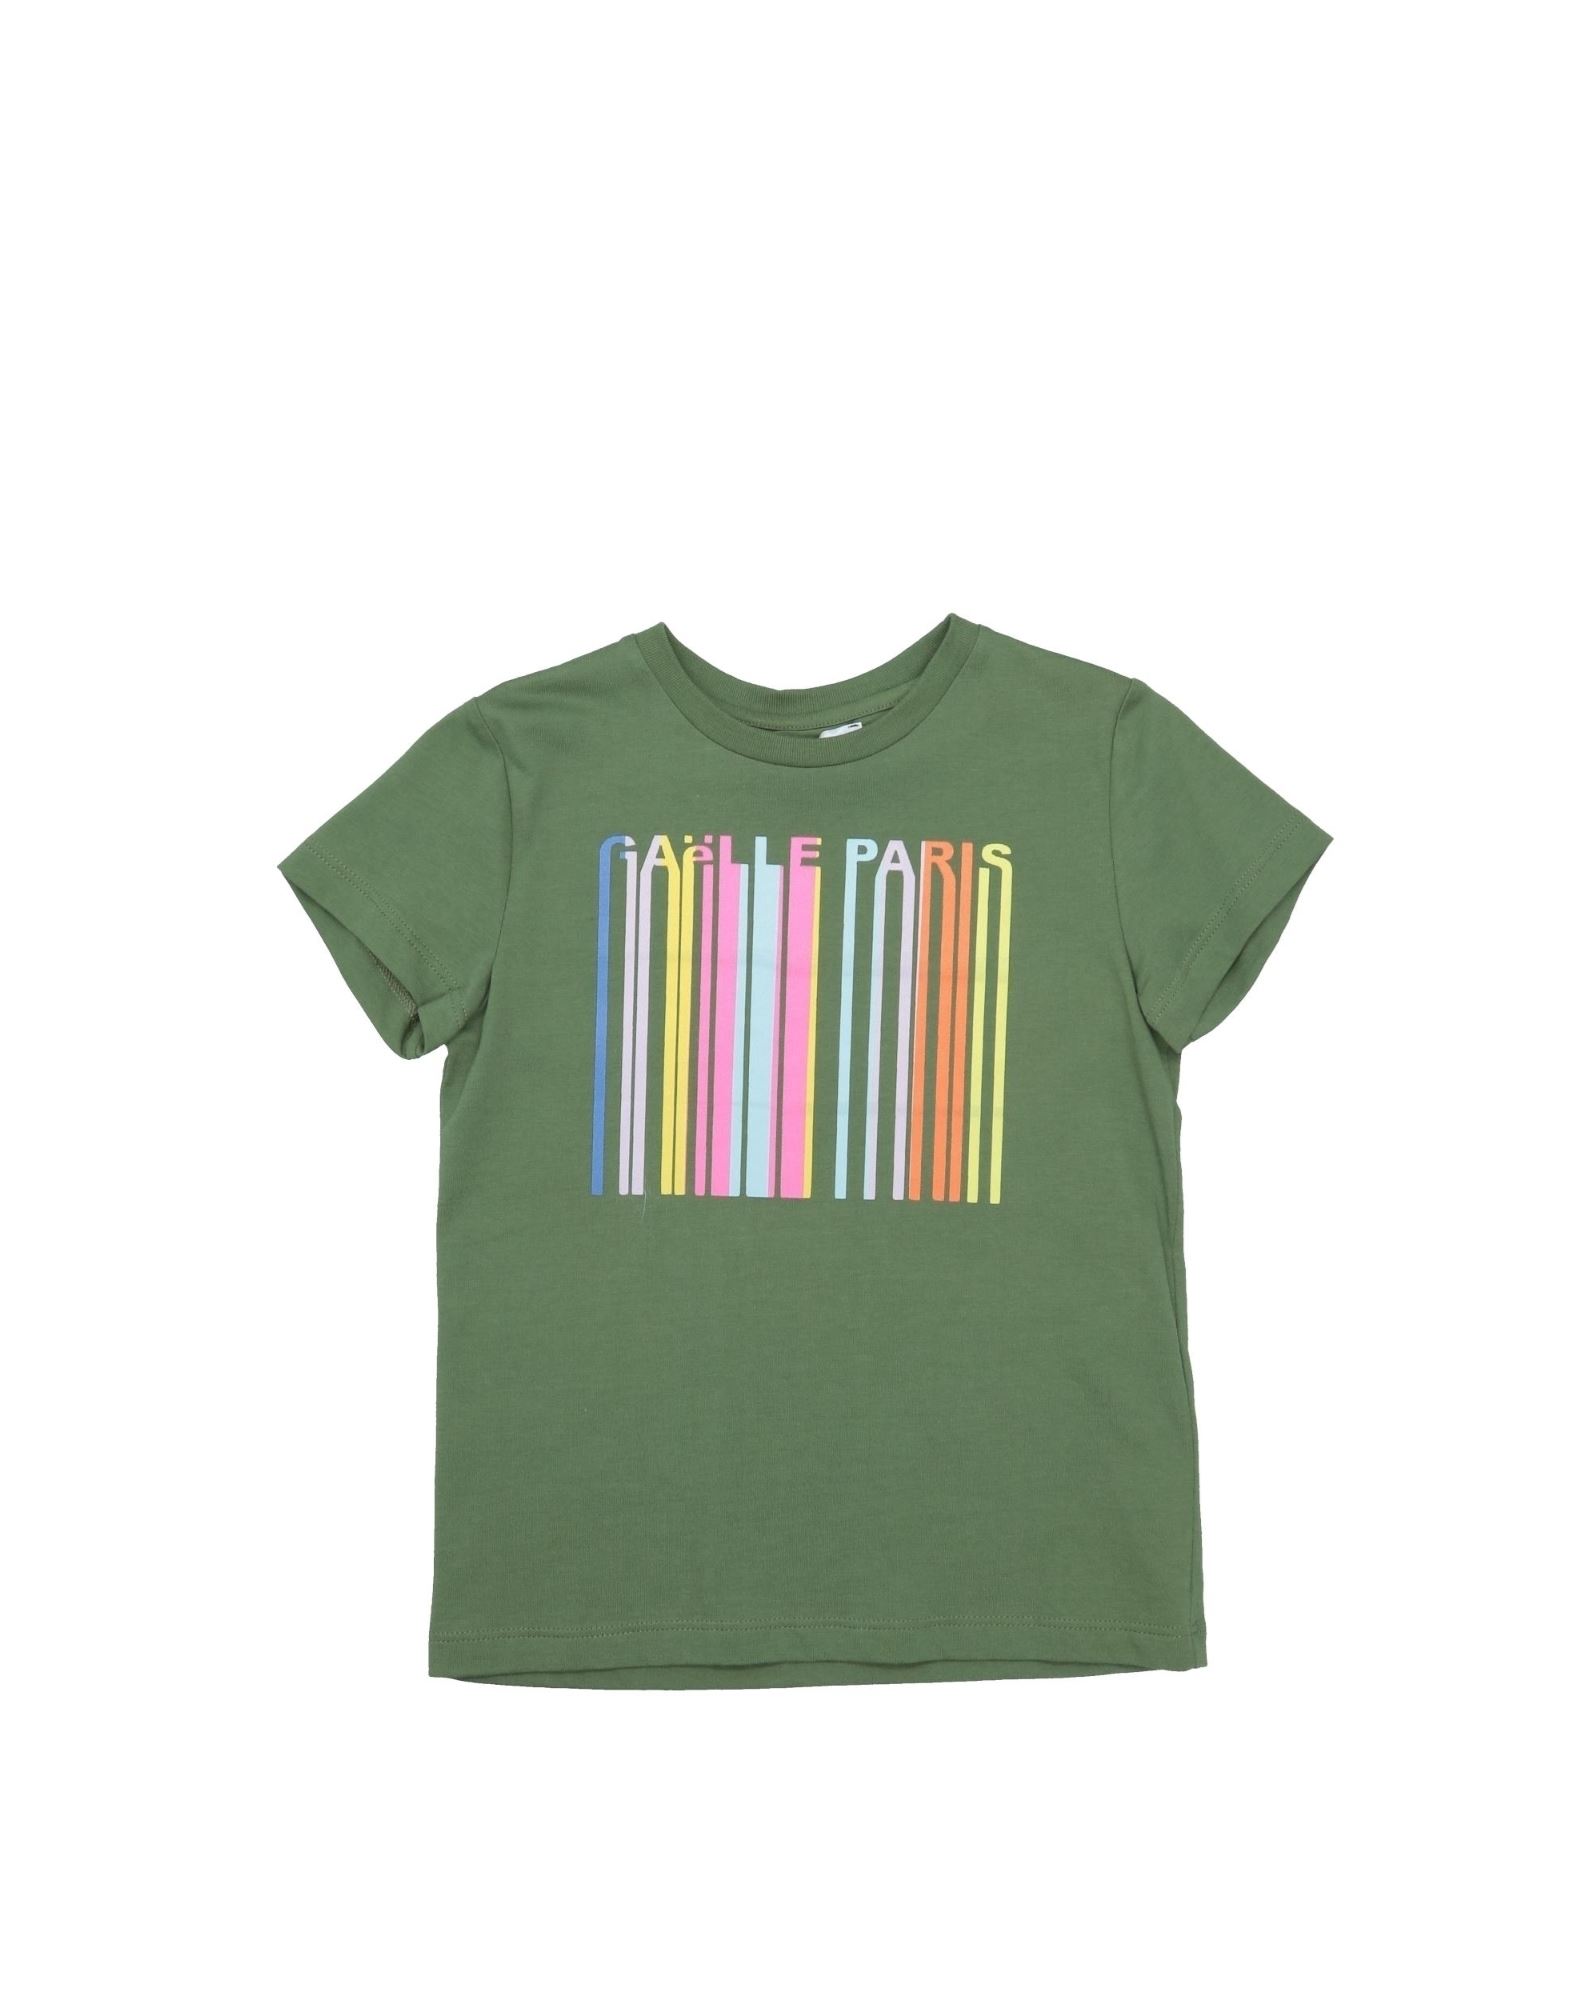 Gaelle Paris Kids' T-shirts In Green